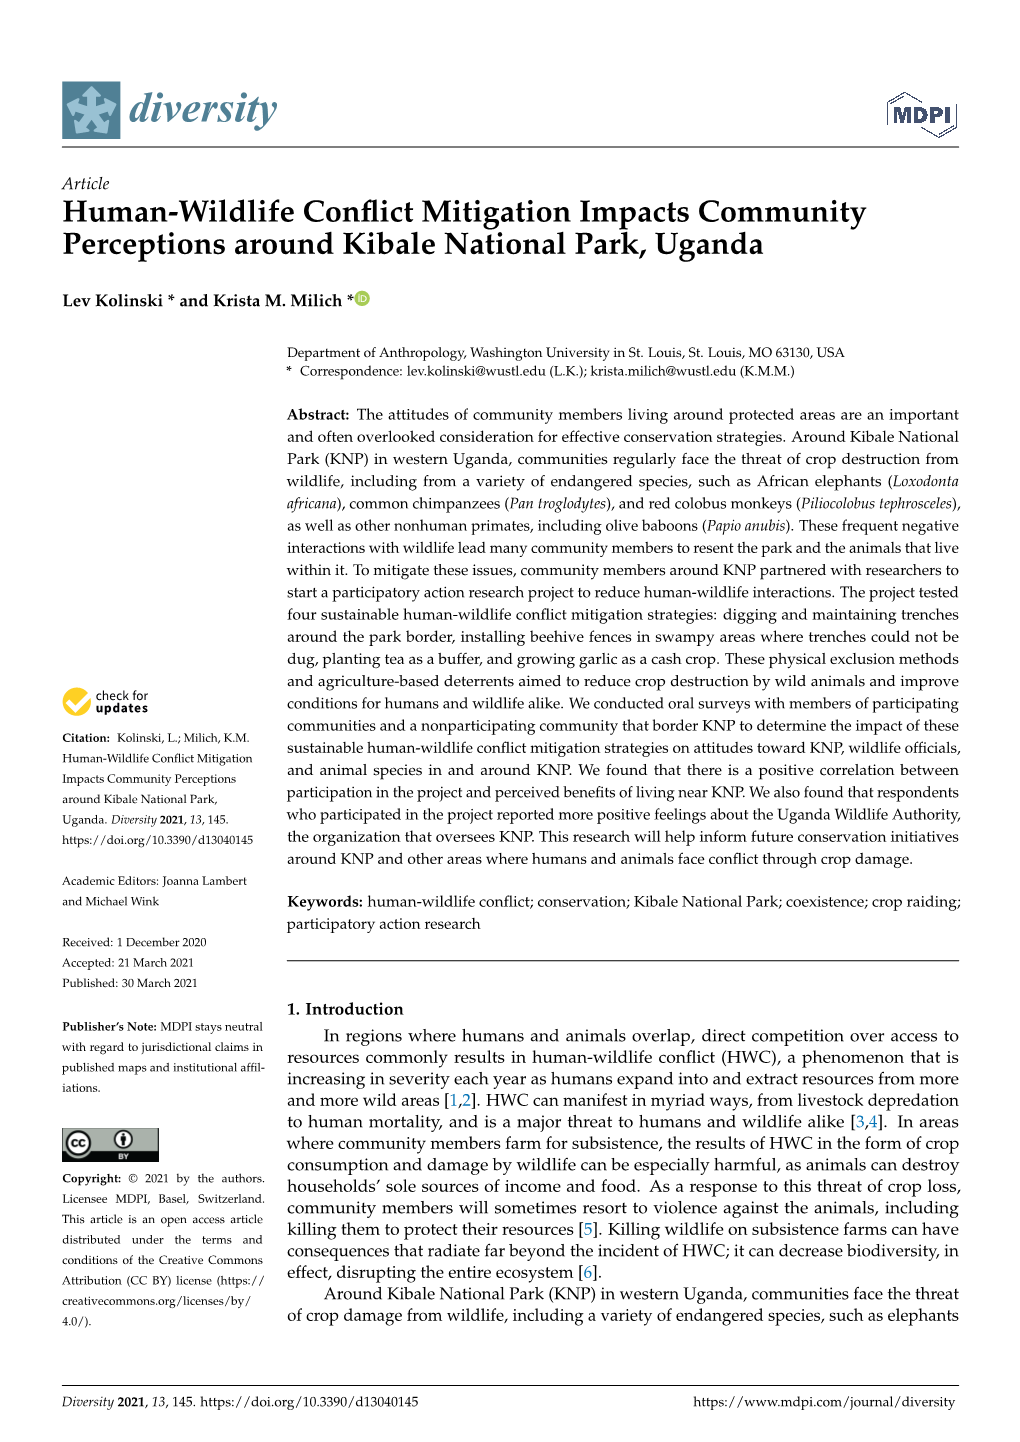 Human-Wildlife Conflict Mitigation Impacts Community Perceptions Around Kibale National Park, Uganda